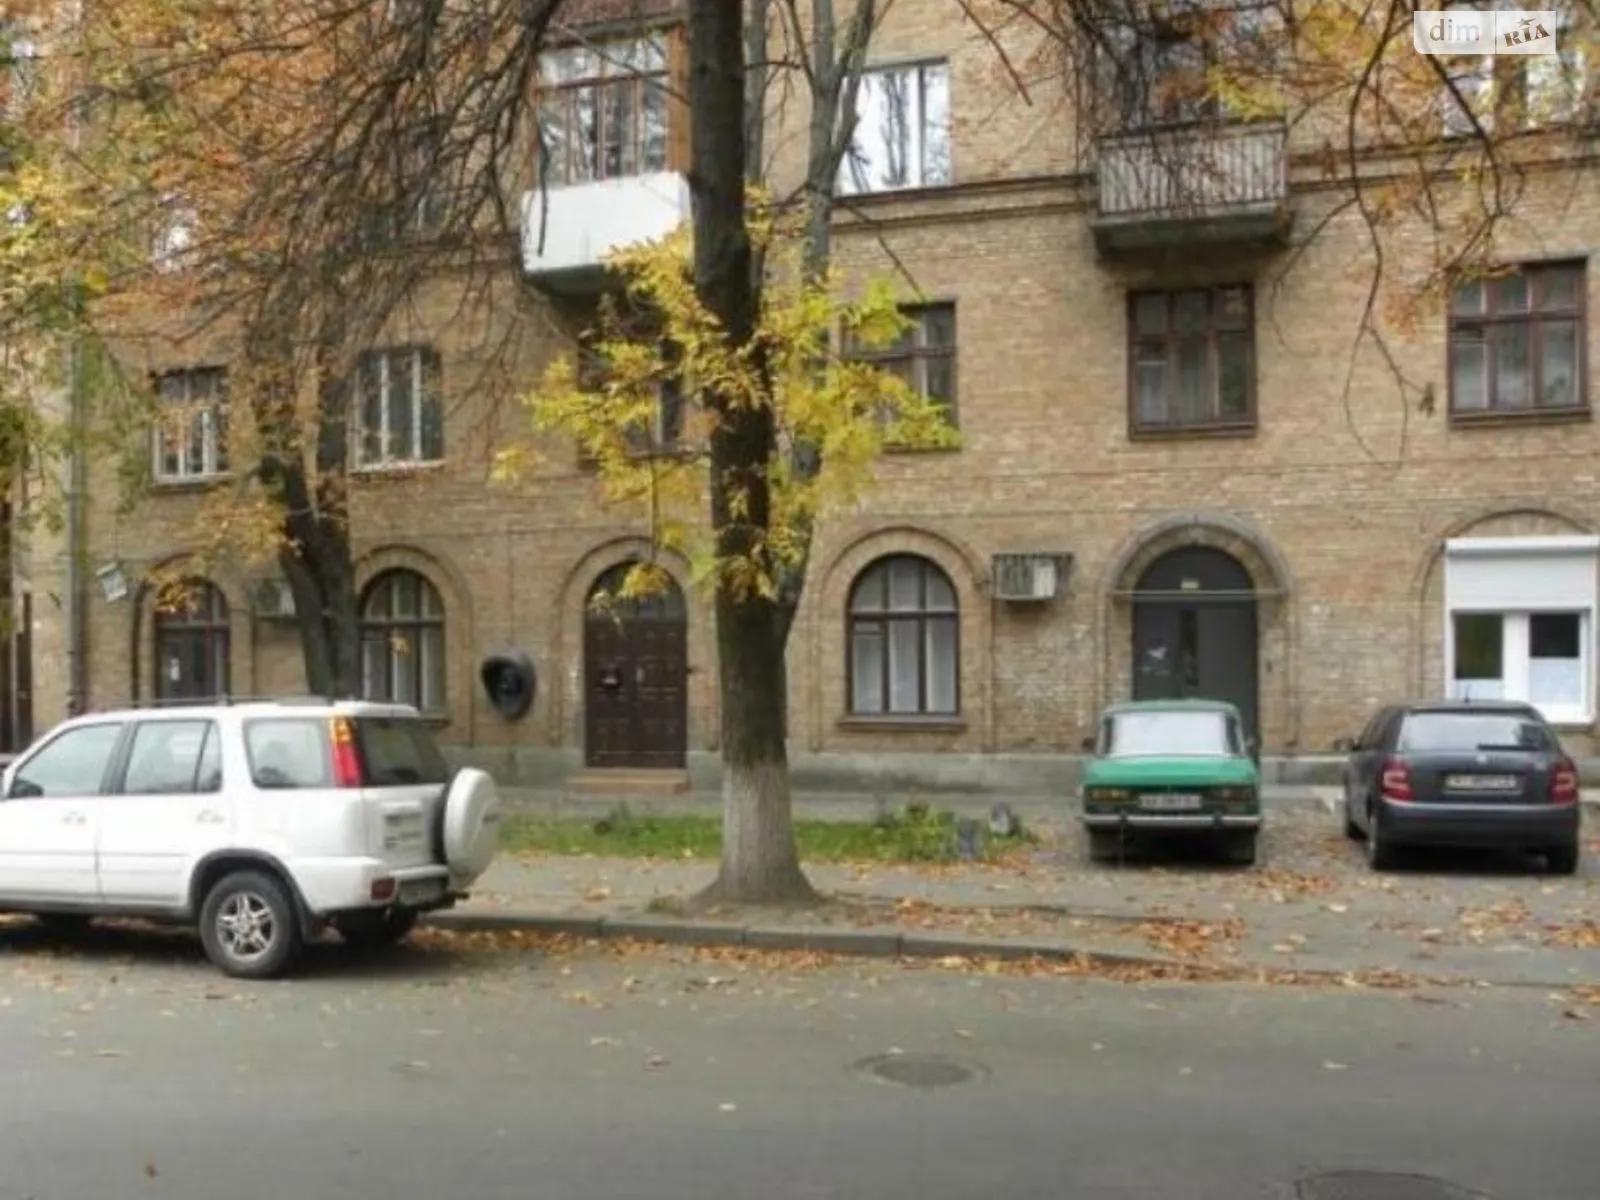 Продается комната 20 кв. м в Киеве, цена: 13000 $ - фото 1